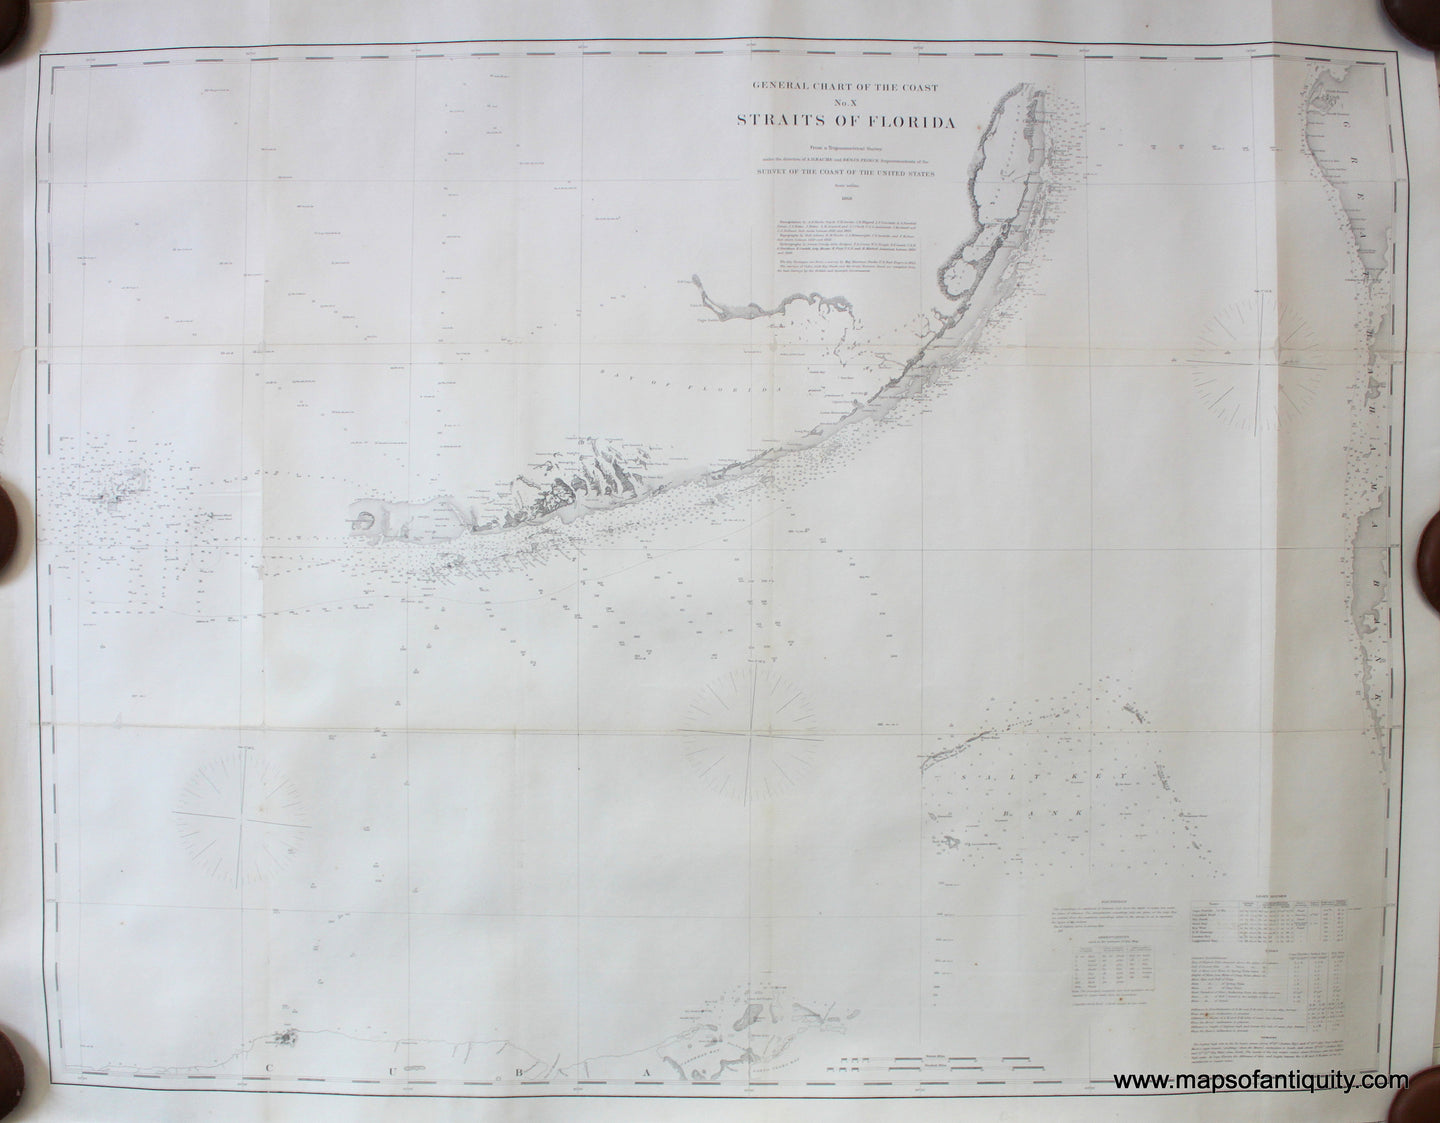 Antique-Black-and-White-Coast-Chart-General-Chart-of-the-Coast-No.-X-Straits-of-Florida-**********-United-States-Florida-1868-US-Coast-Survey-Maps-Of-Antiquity